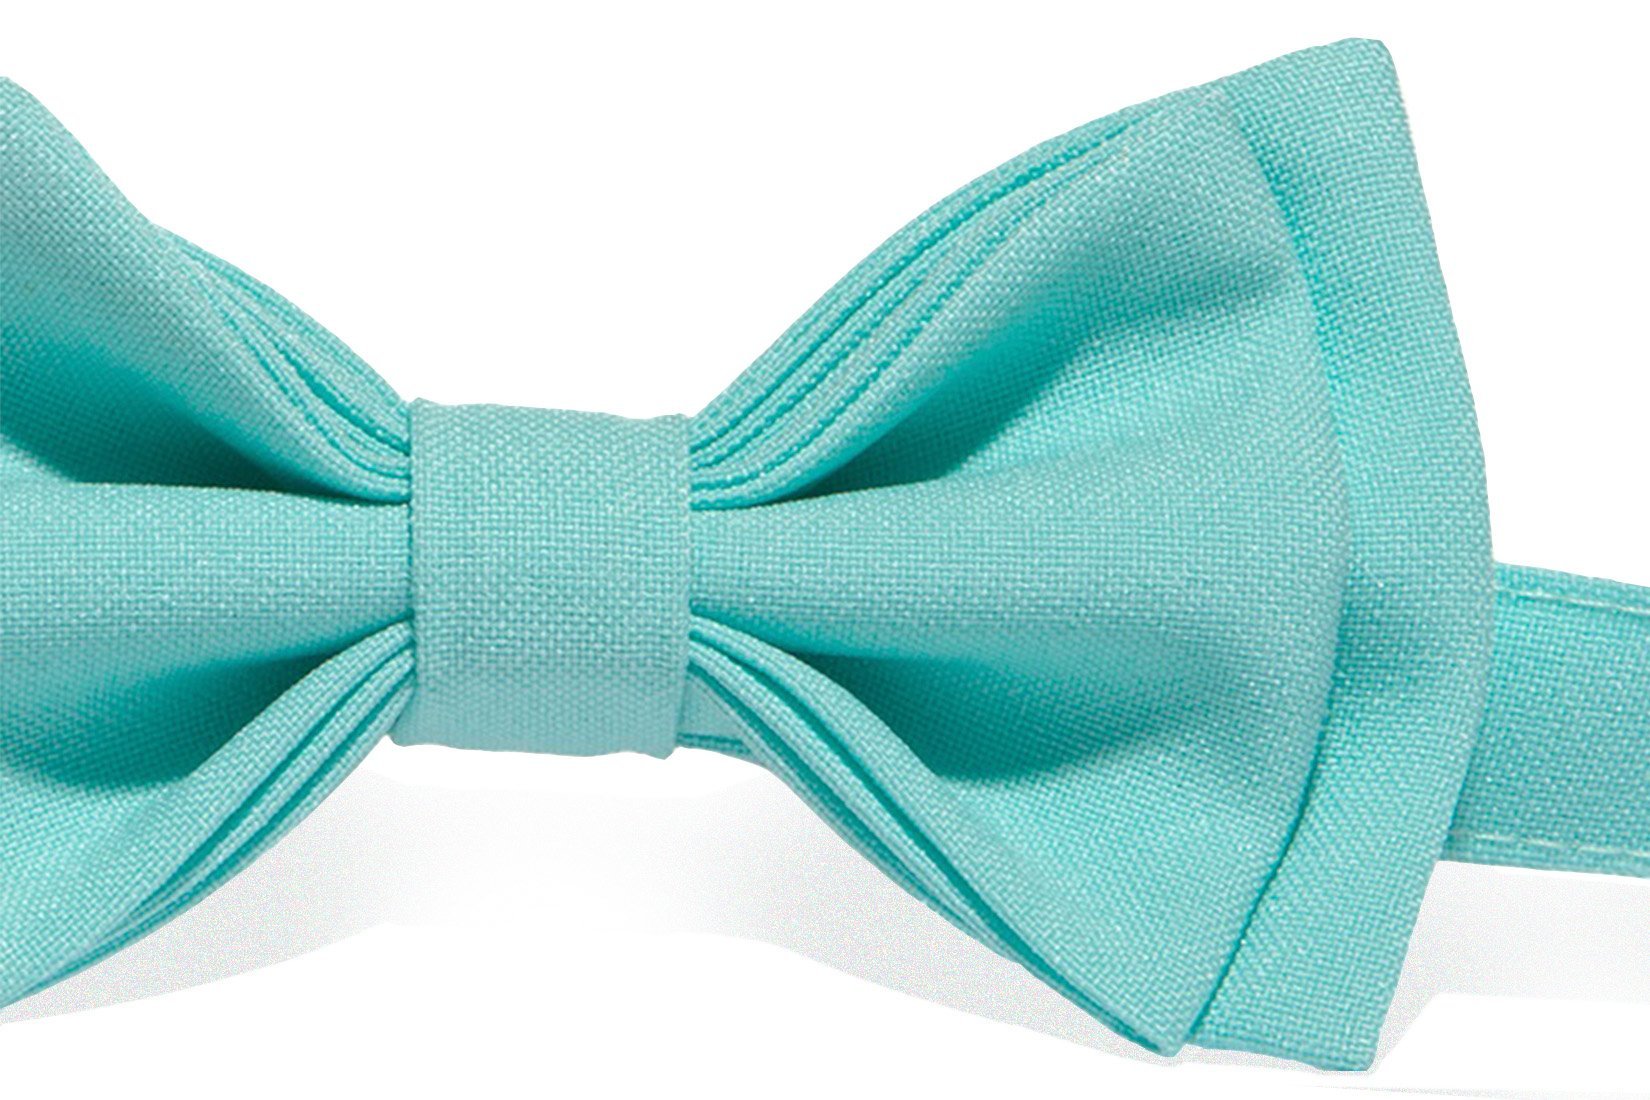 Aqua Bow Tie